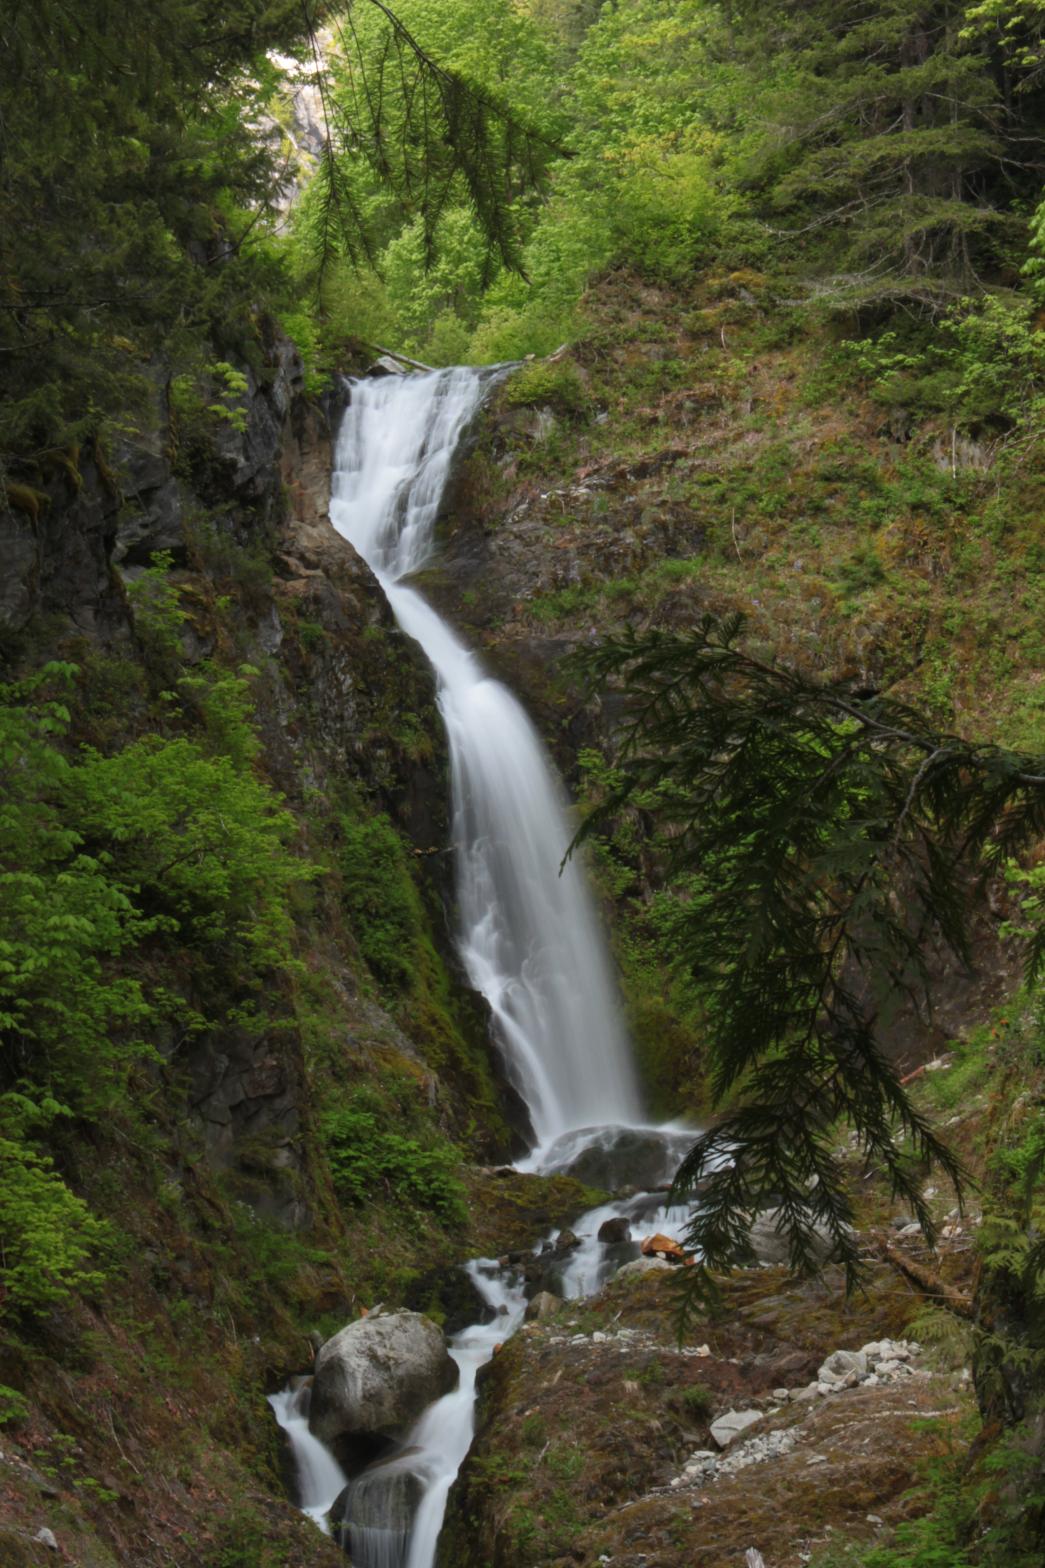 Main section of Hard Creek Falls